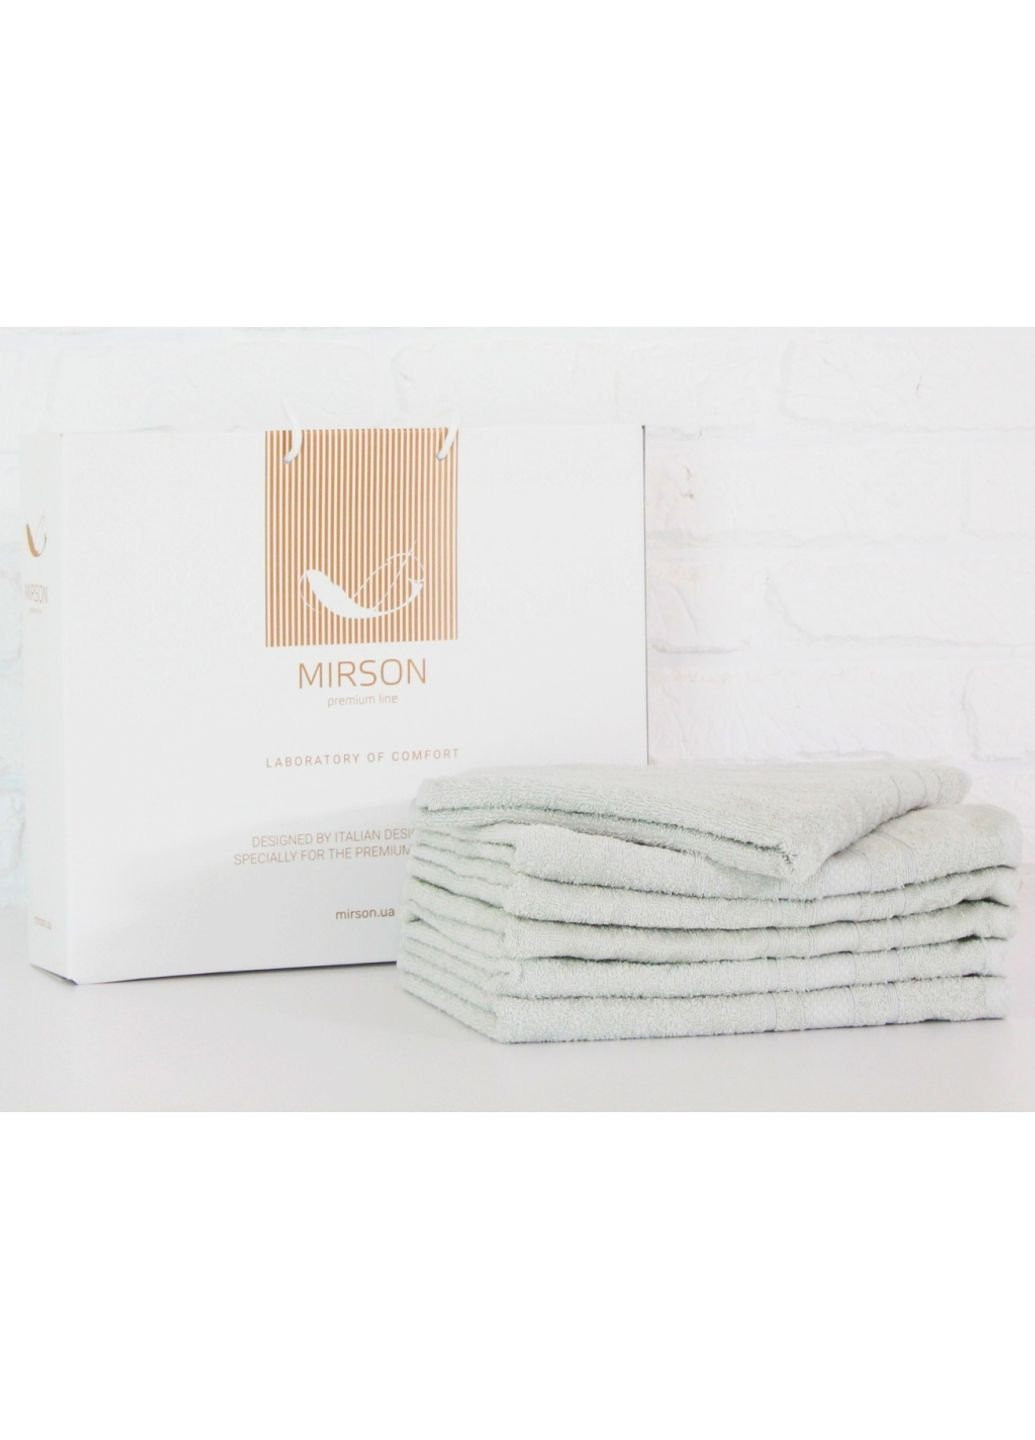 No Brand полотенце mirson набор банных №5078 elite softness menthol 70х140 6 шт (2200003524185) мятный производство - Украина